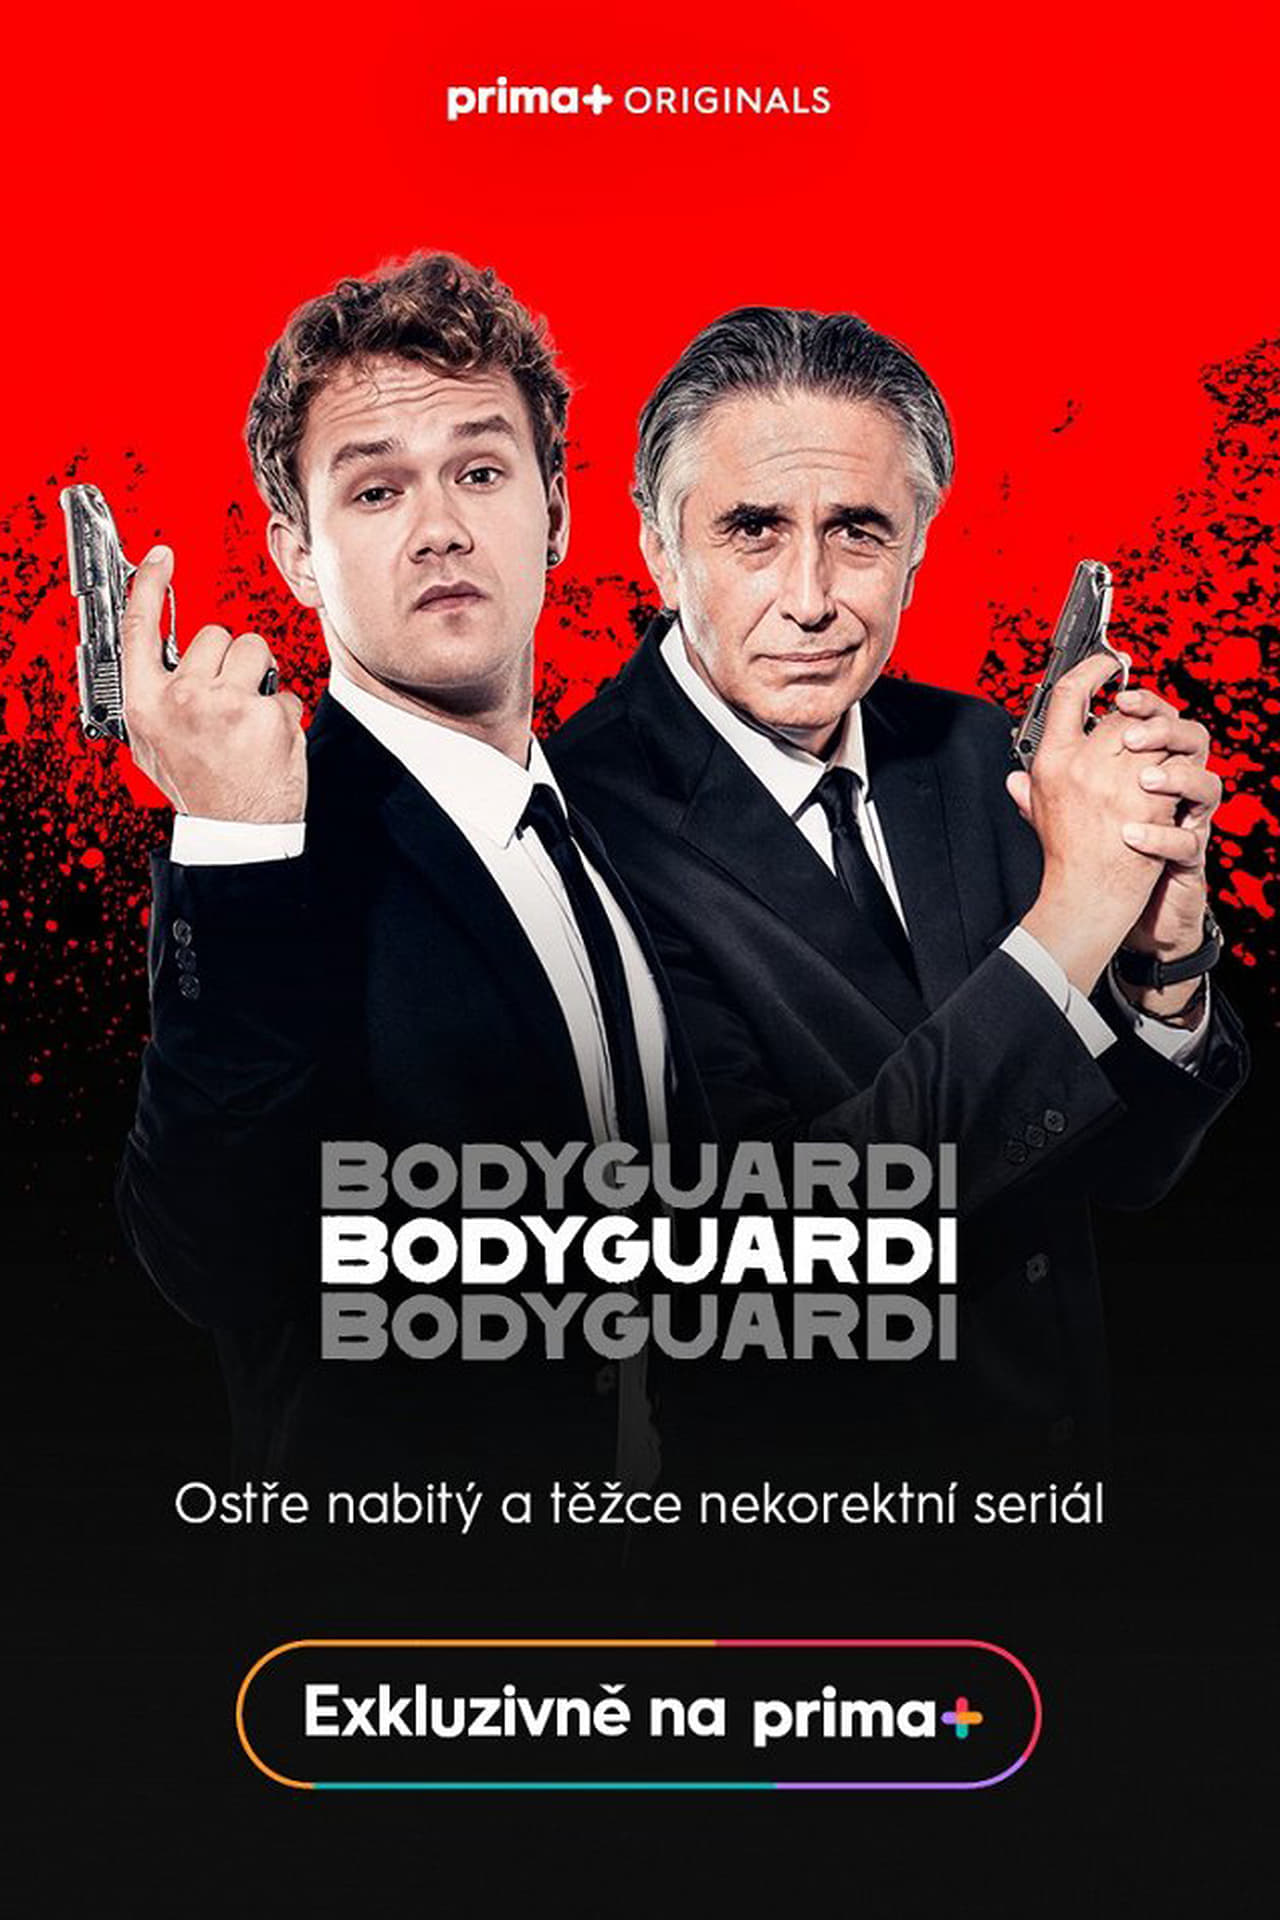 Plakát pro film “Bodyguardi”